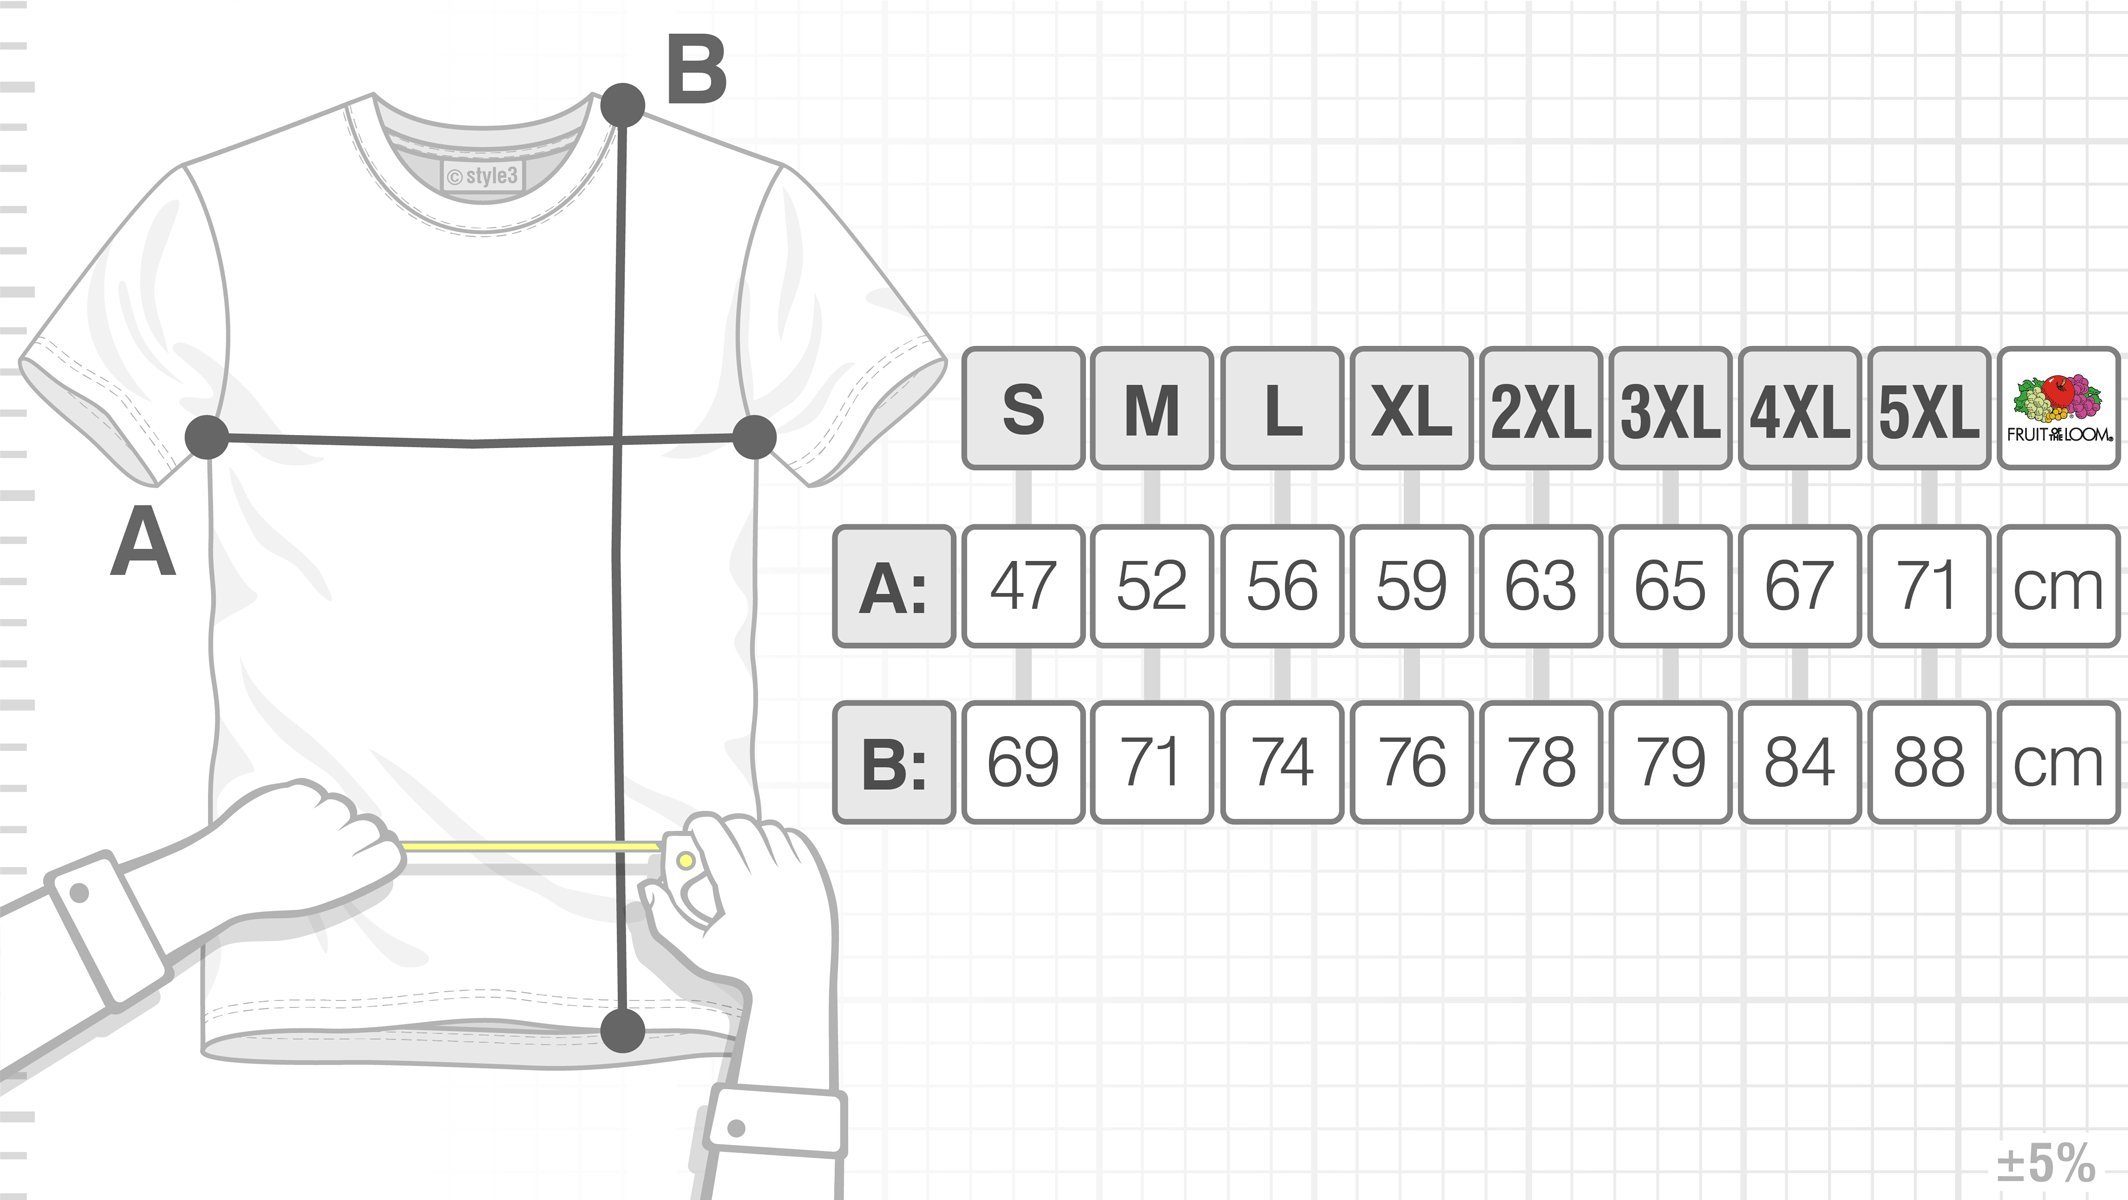 kreis Sheldon theory style3 rot T-Shirt Inner Print-Shirt bang Herren physik Circles big cooper kreise